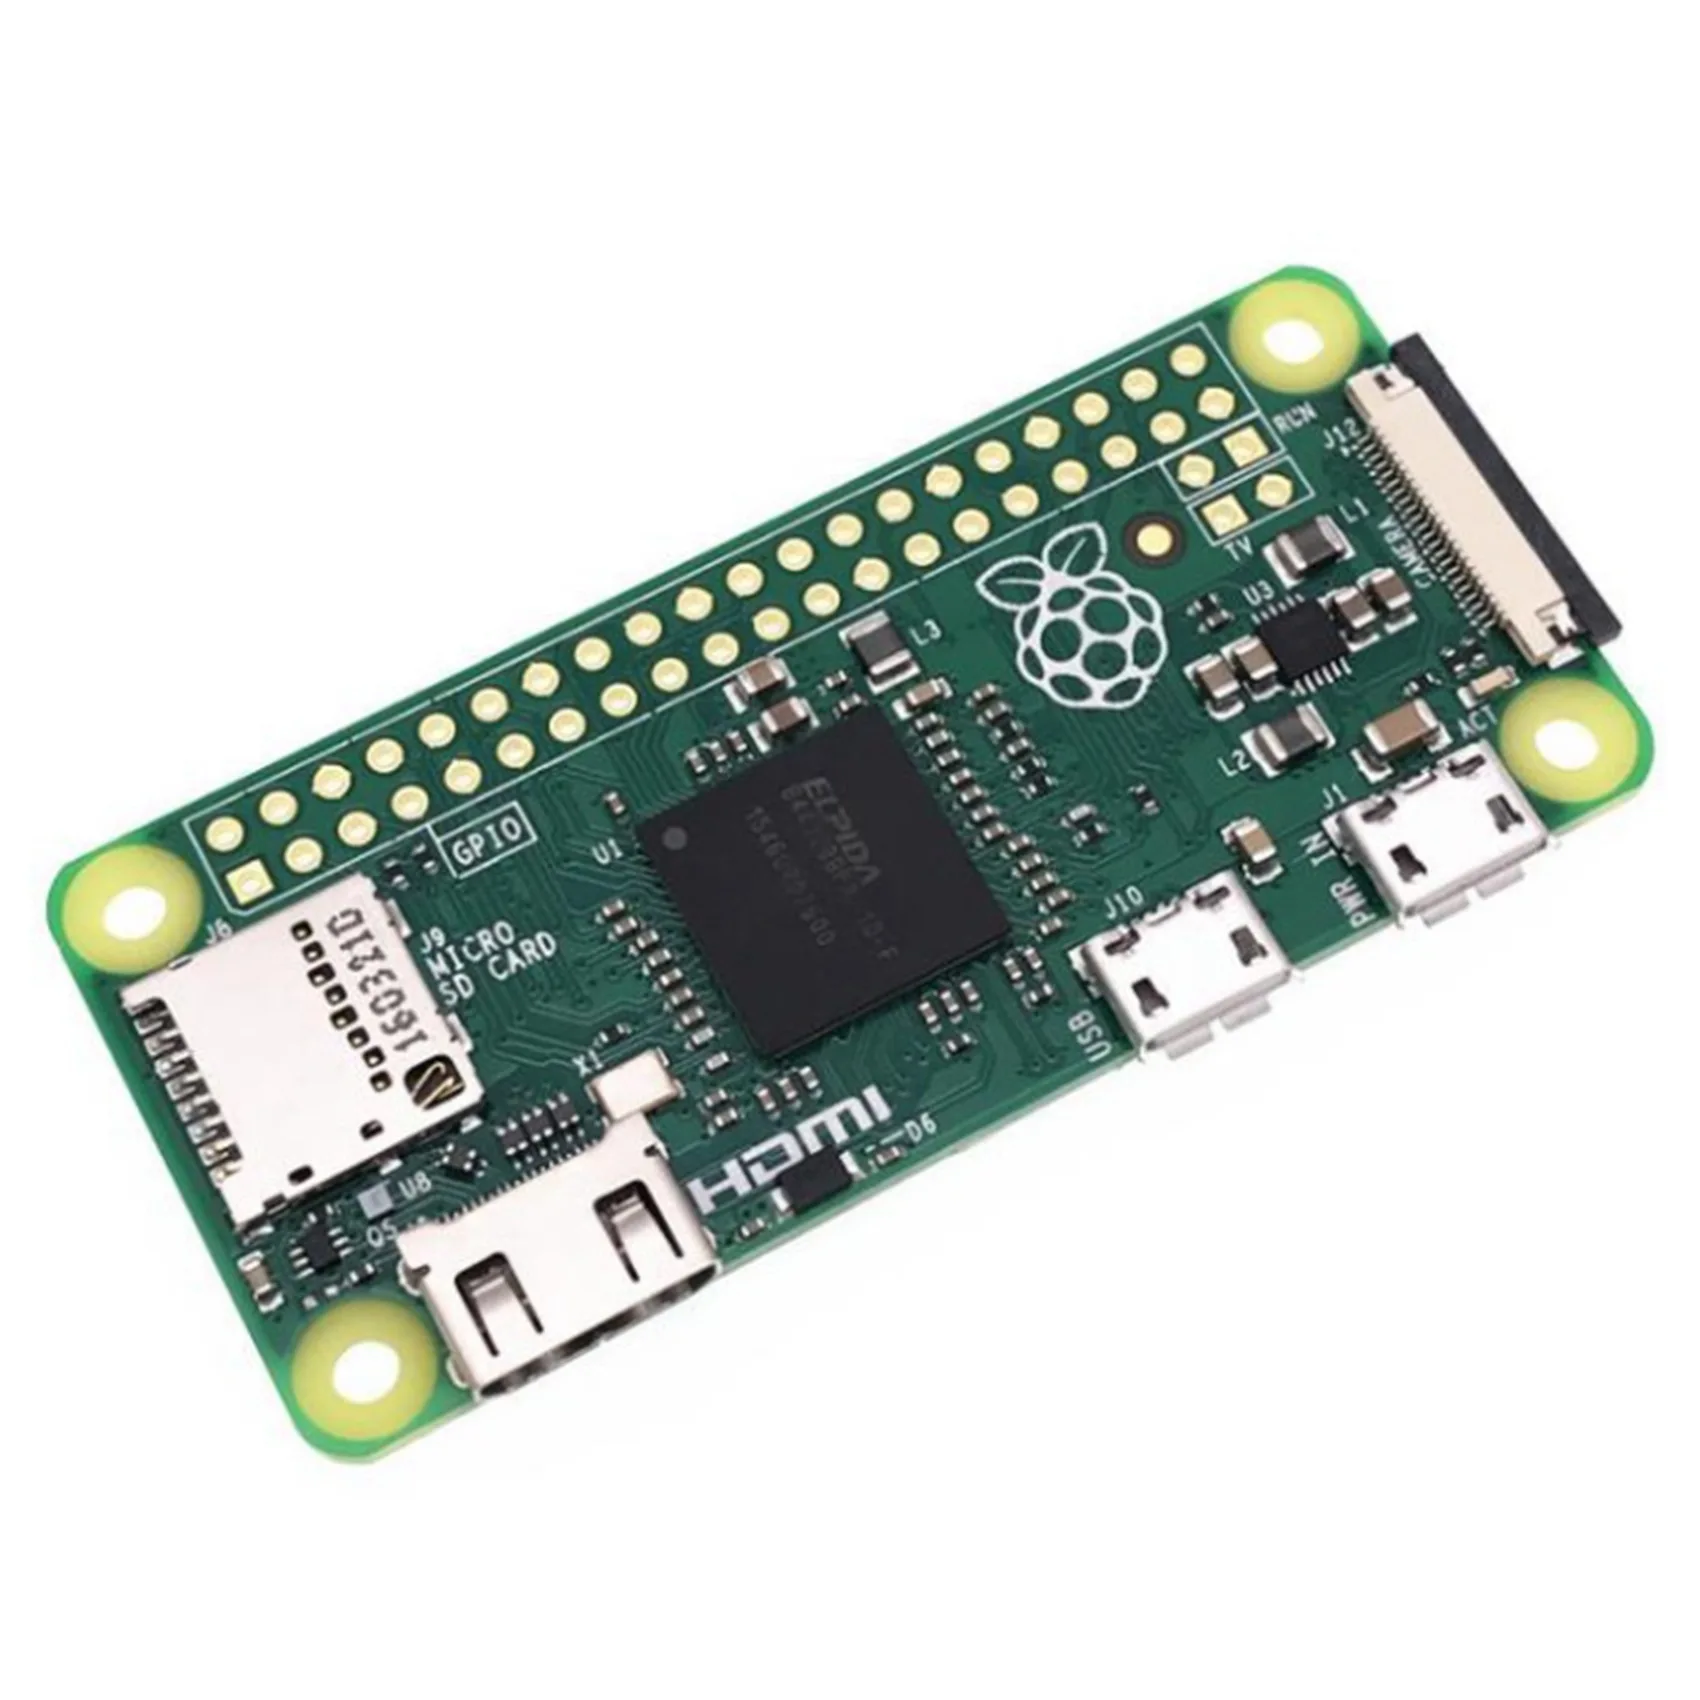 Original Raspberry pi Zero 1.3 With Camera Connector Pi0 Board Version with 1GHz 